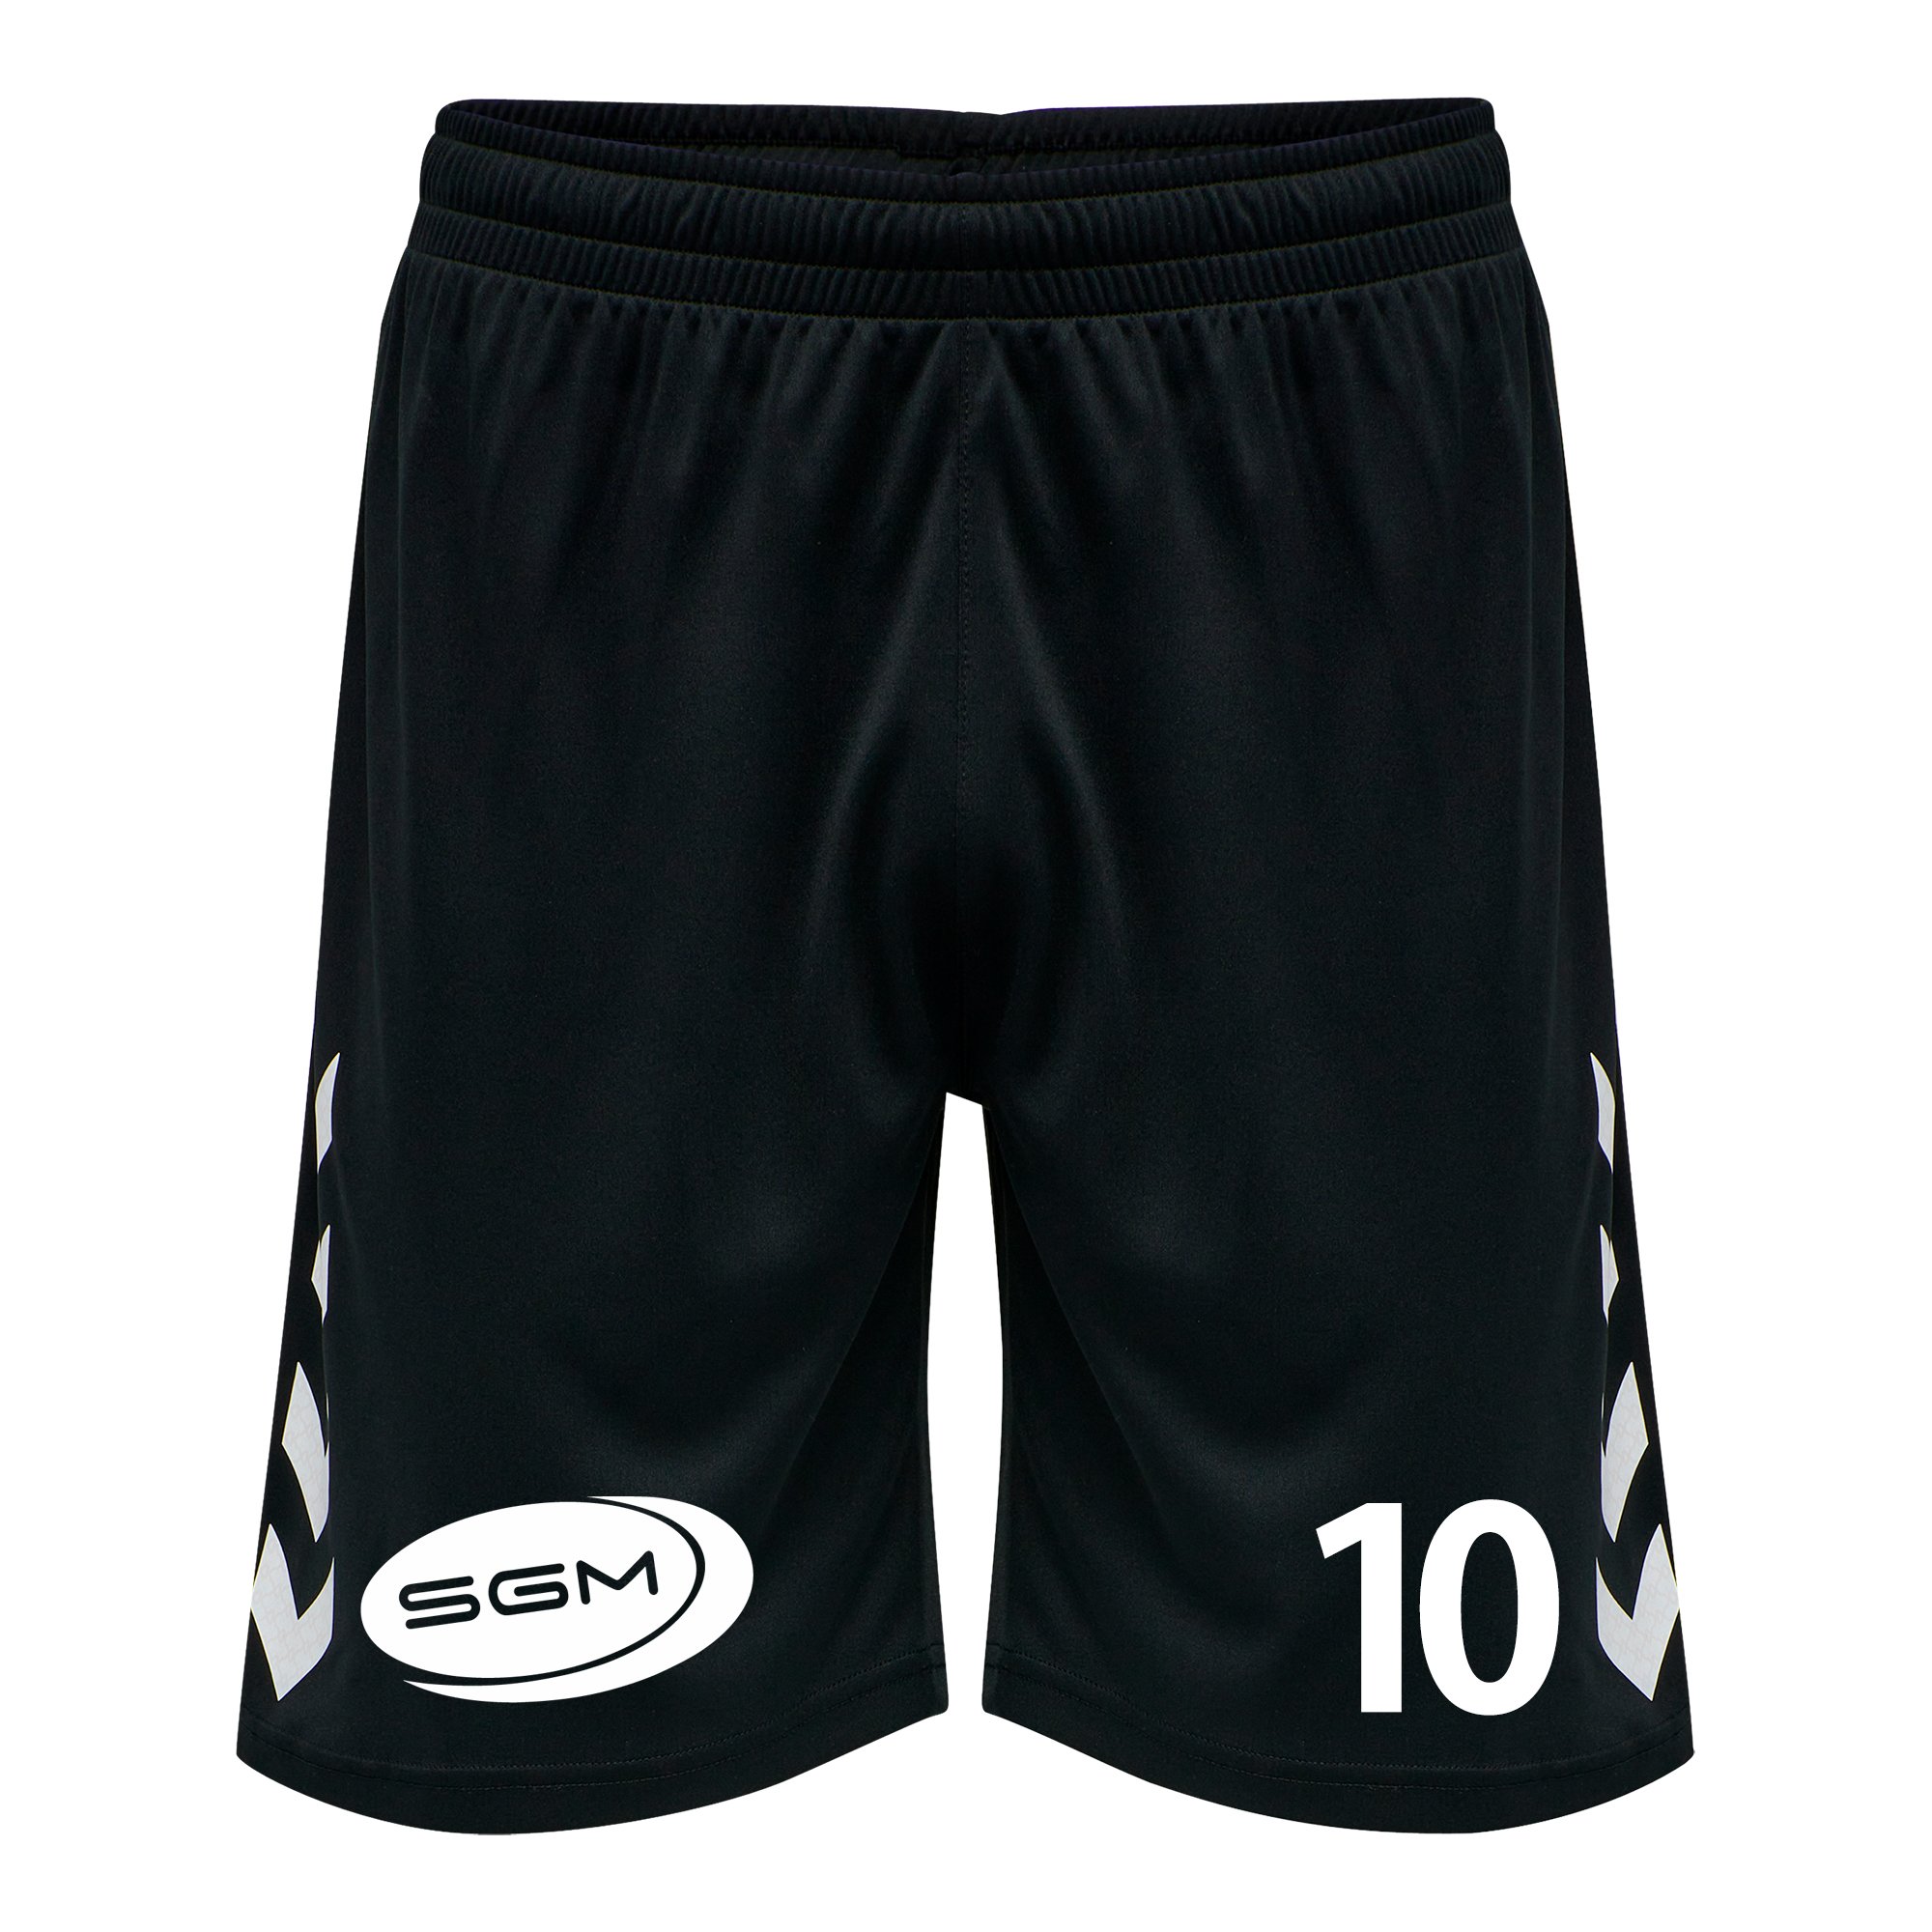 SG Misburg Shorts